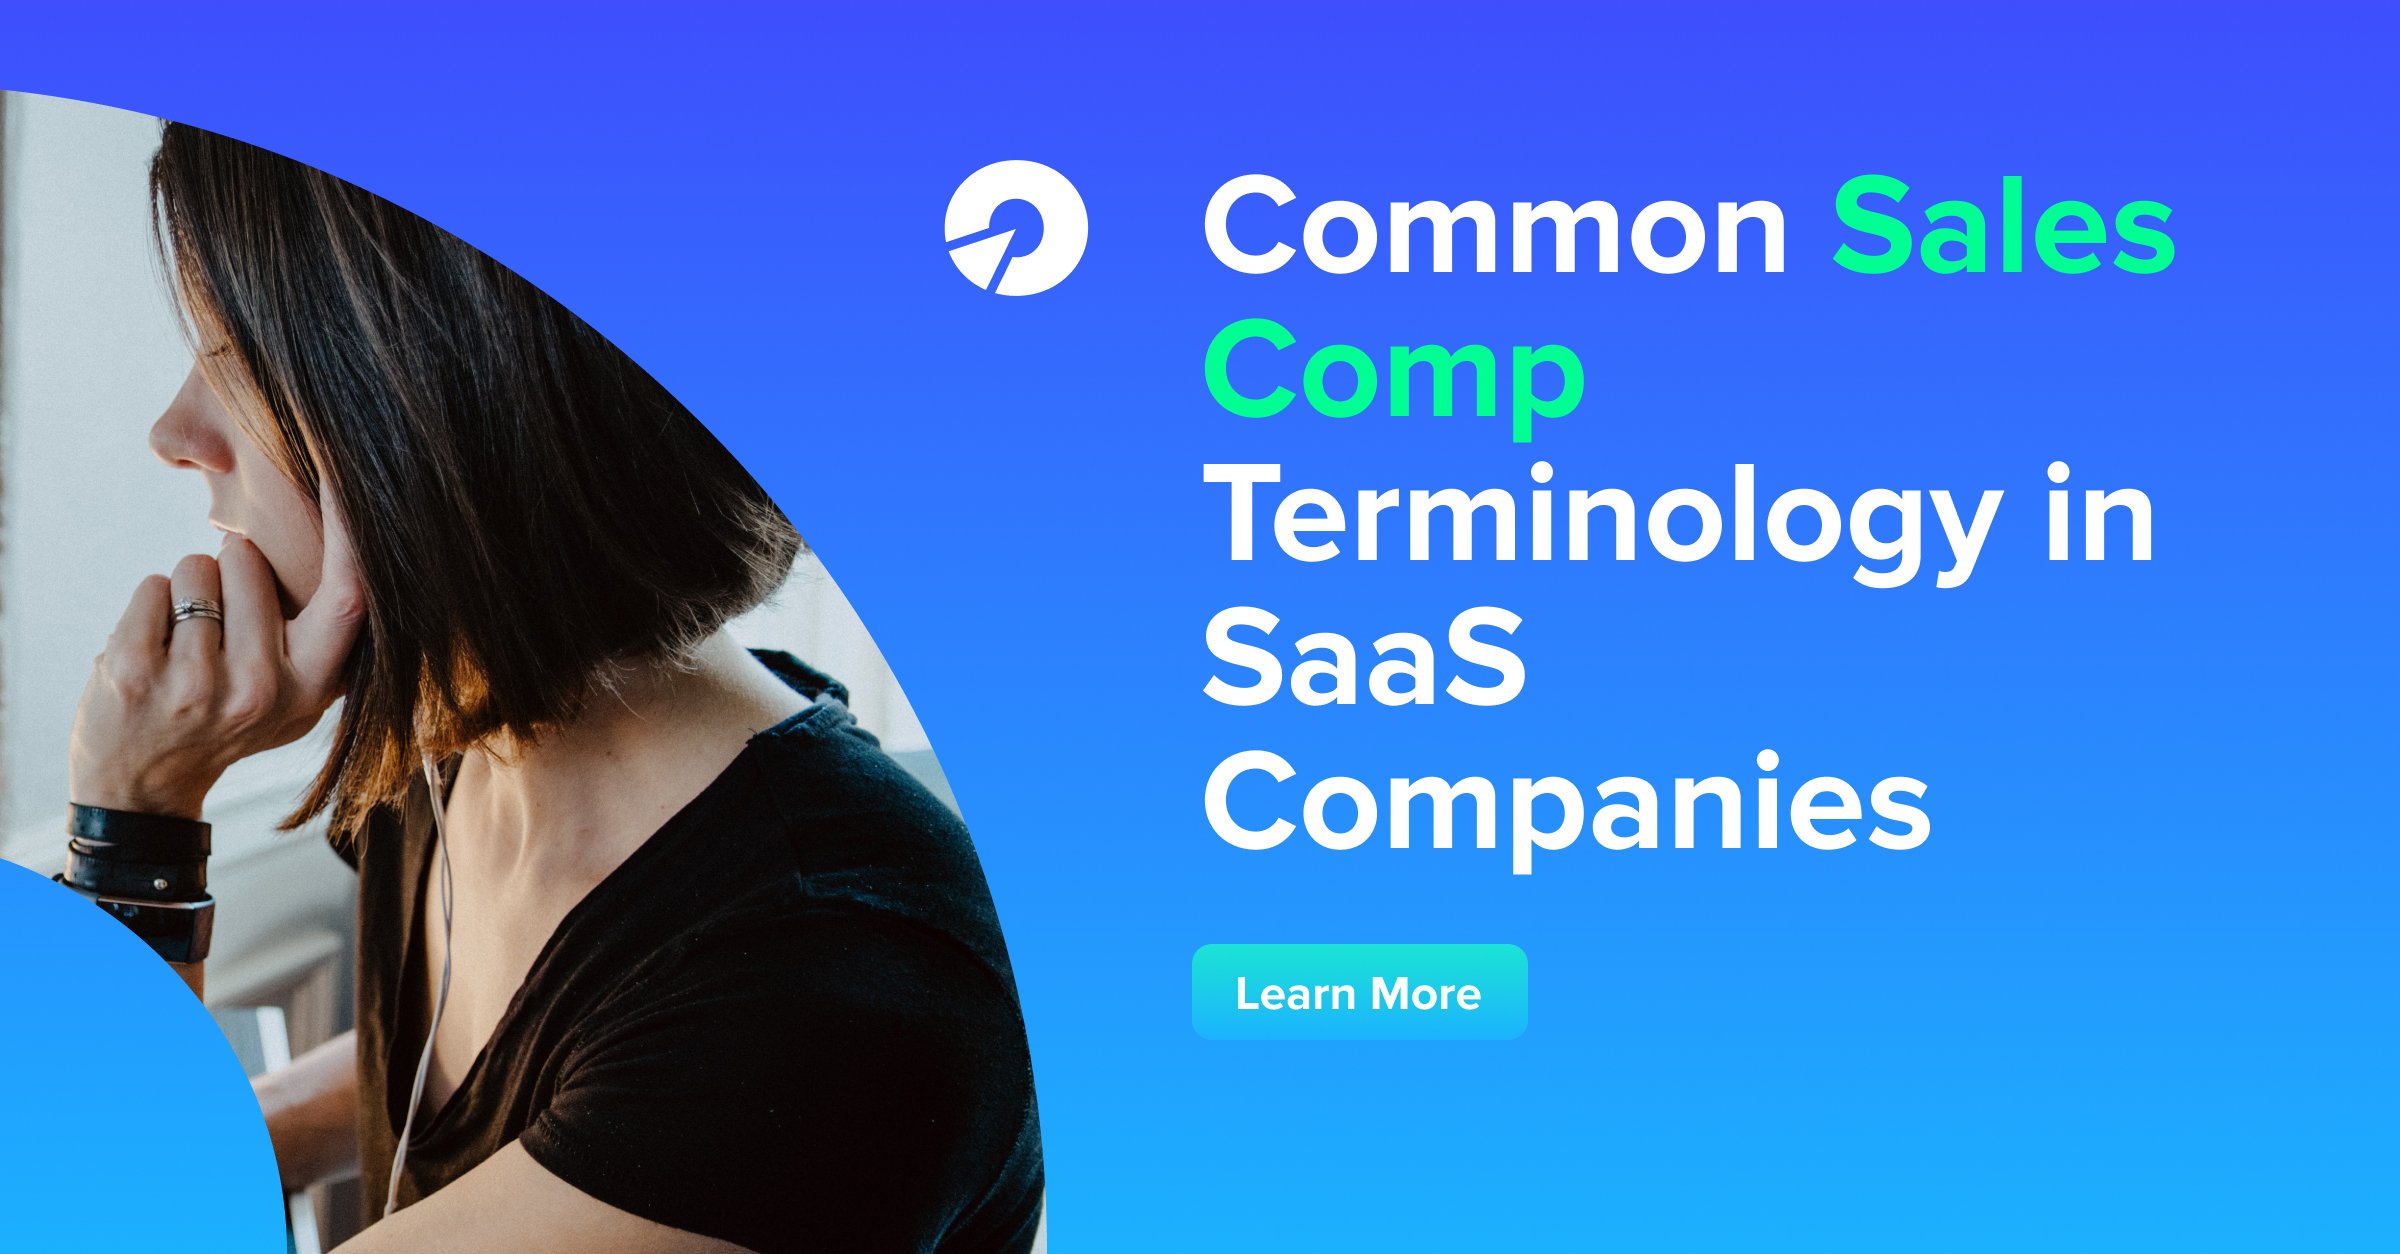 Common Sales Comp Terminology in SaaS